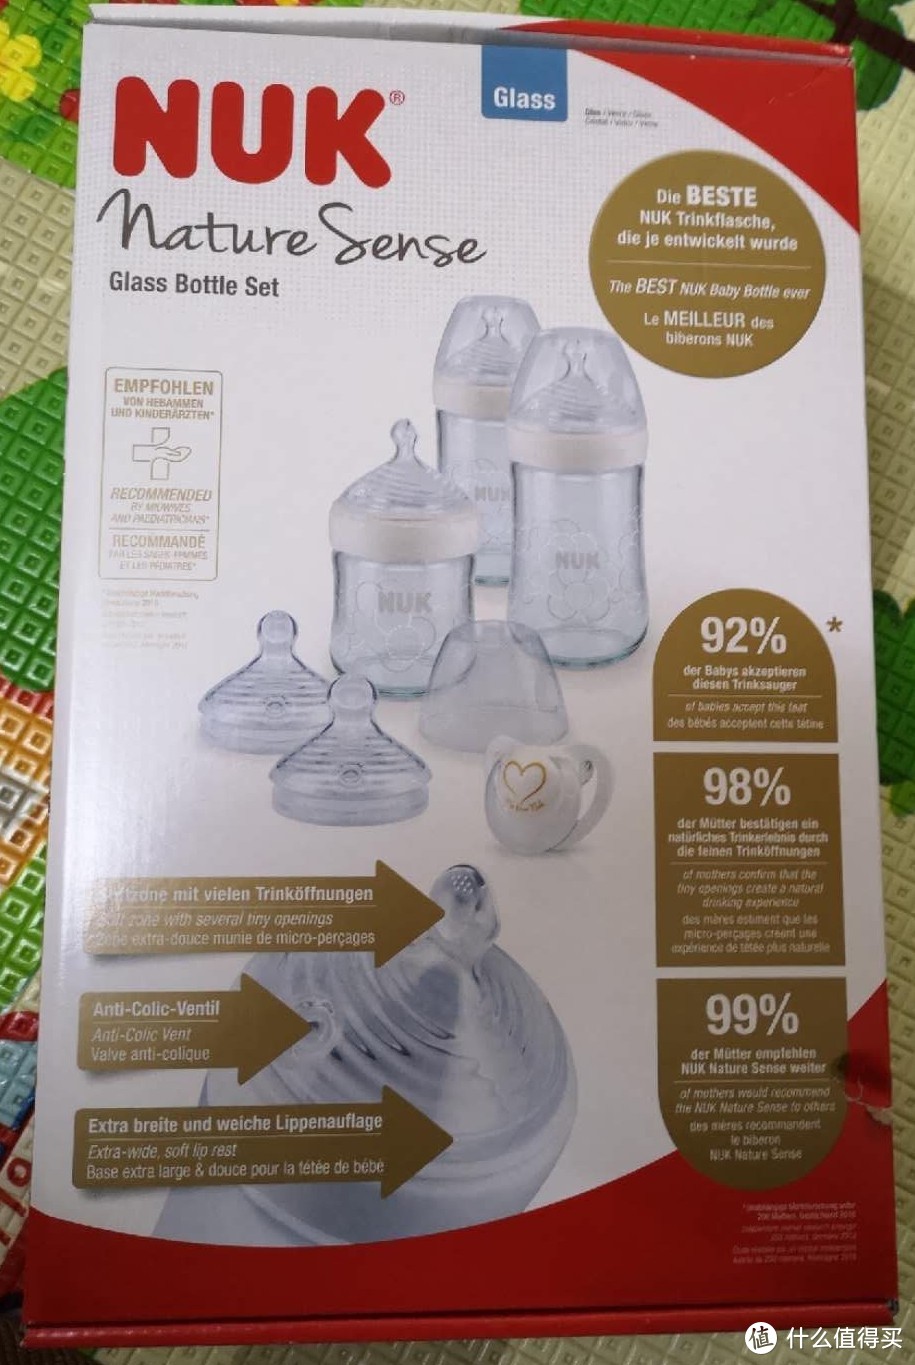 MUK Nature Sense 玻璃奶瓶套装 与 Pigeon 奶瓶对比，另附当地价钱